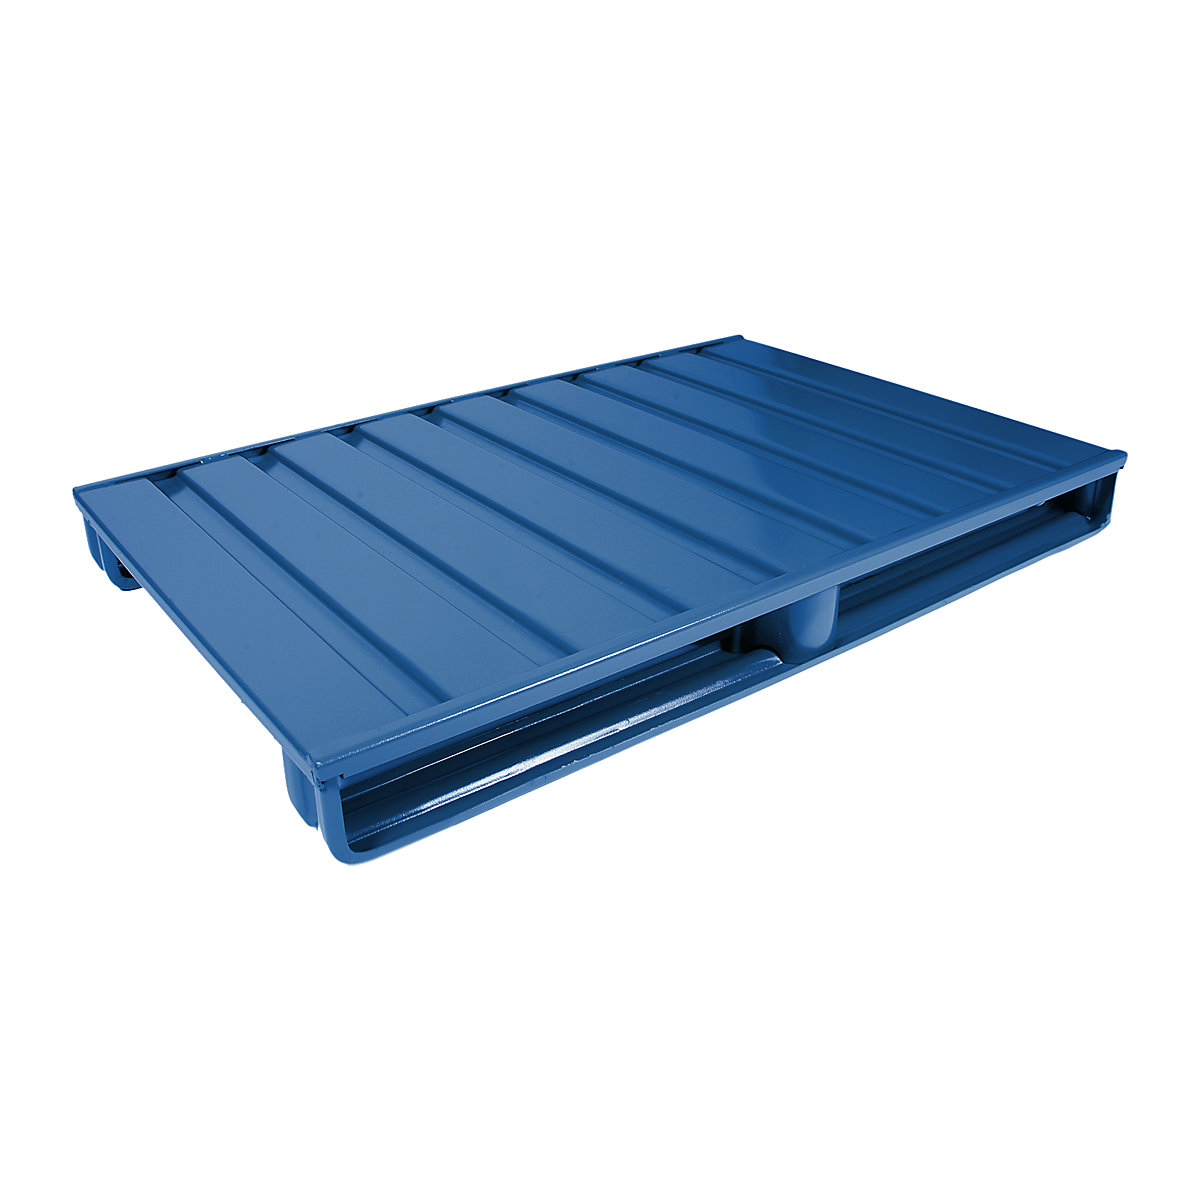 Flat steel pallet – Heson, LxW 1200 x 800 mm, max. load 2000 kg, gentian blue-2